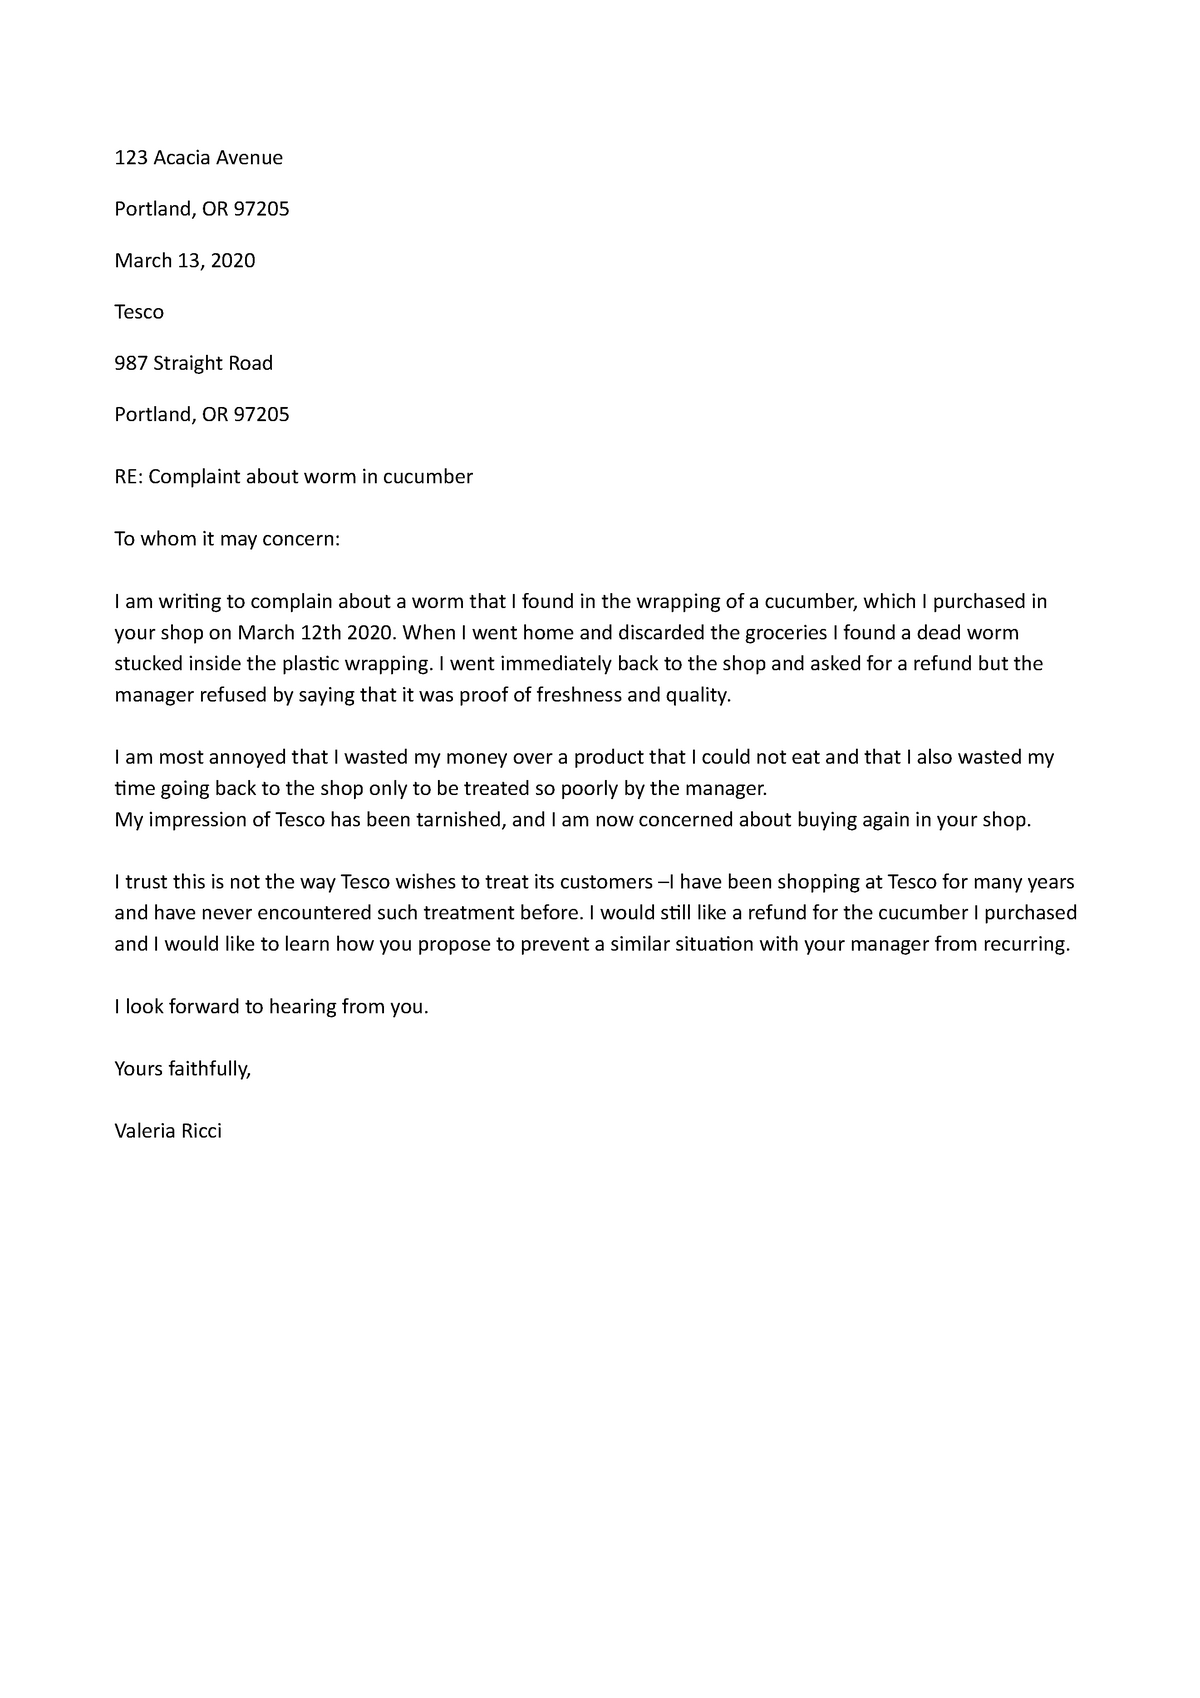 Sample of complaint letter for homework - 123 Acacia Avenue Portland ...